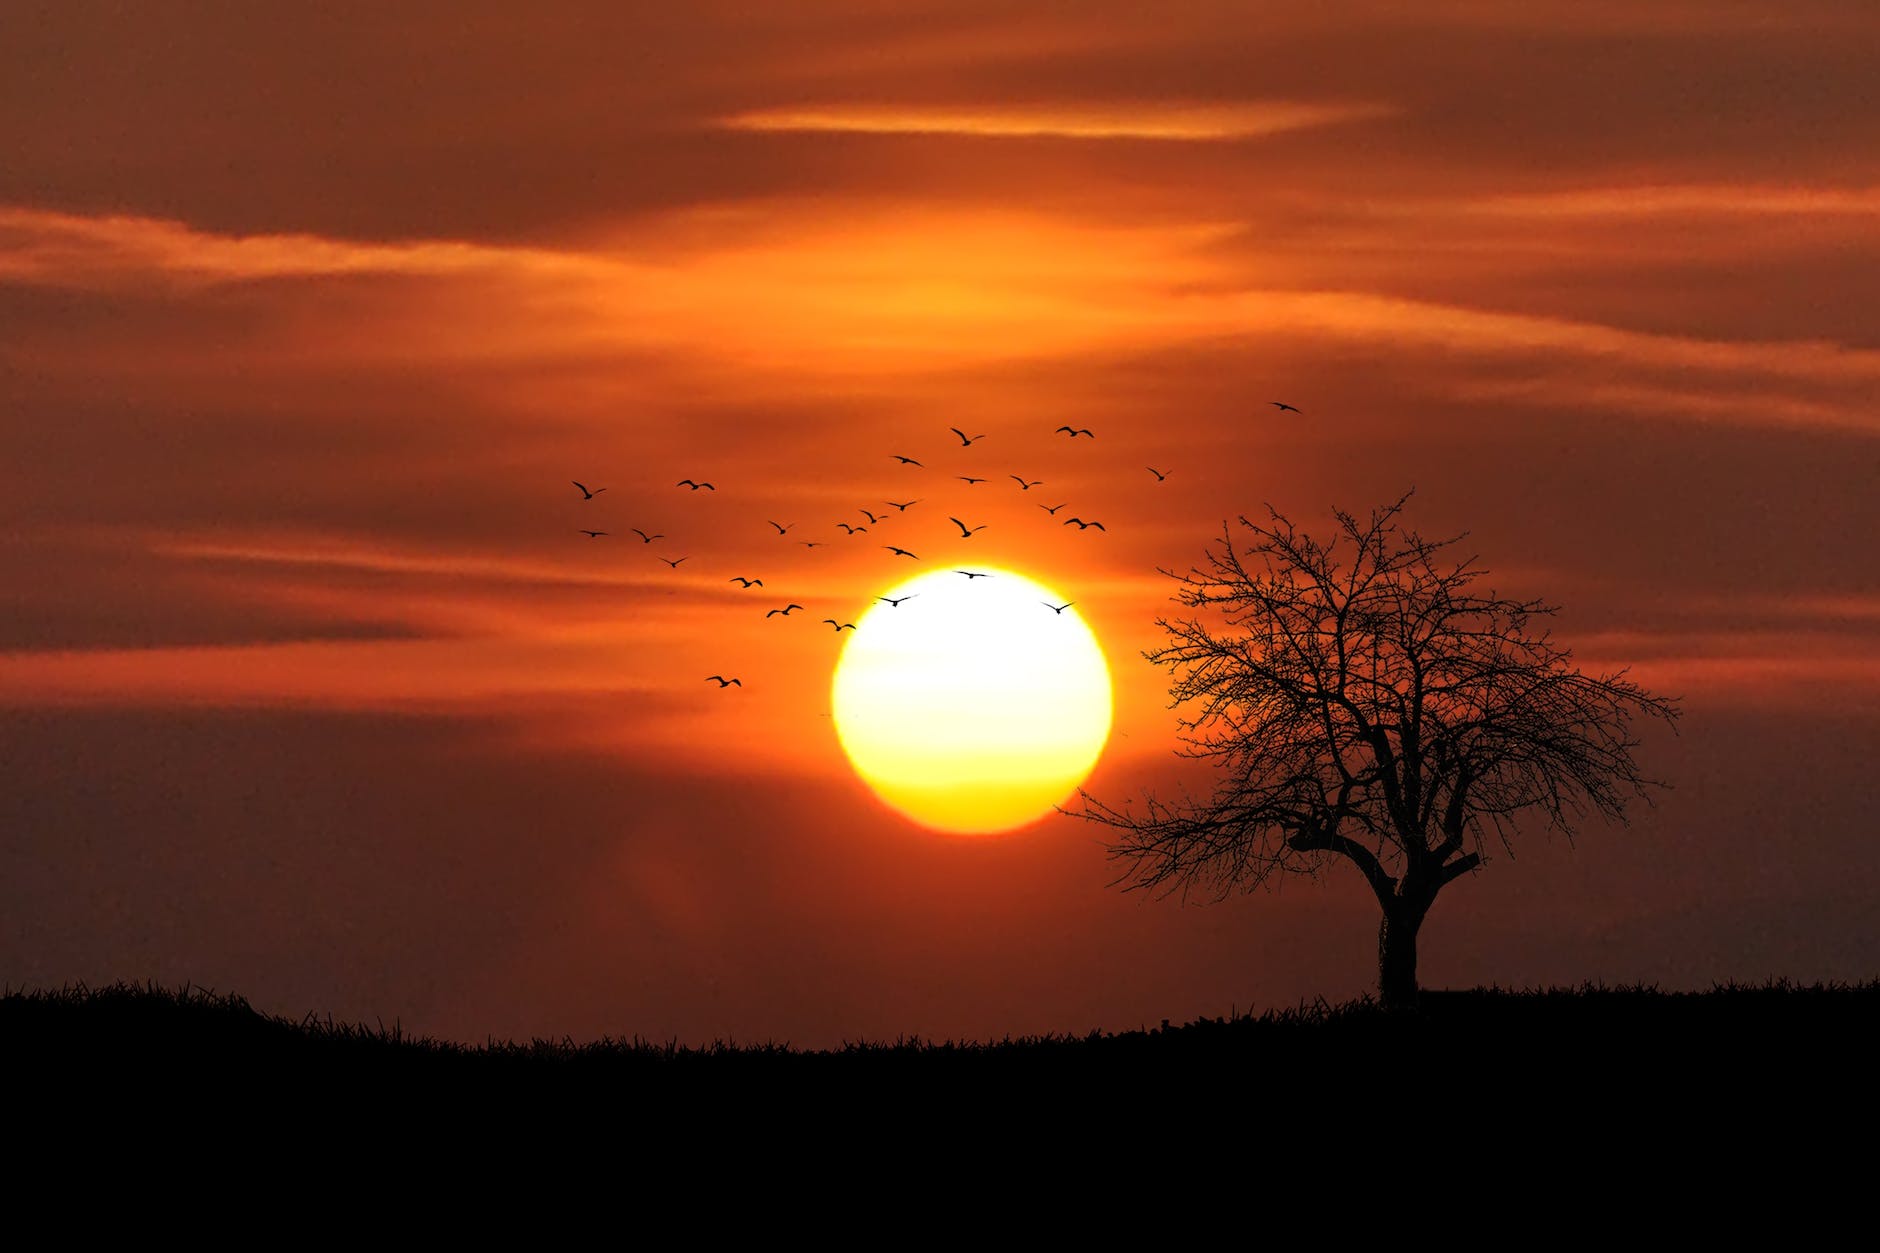 flock of birds flying over bare tree overlooking sunset